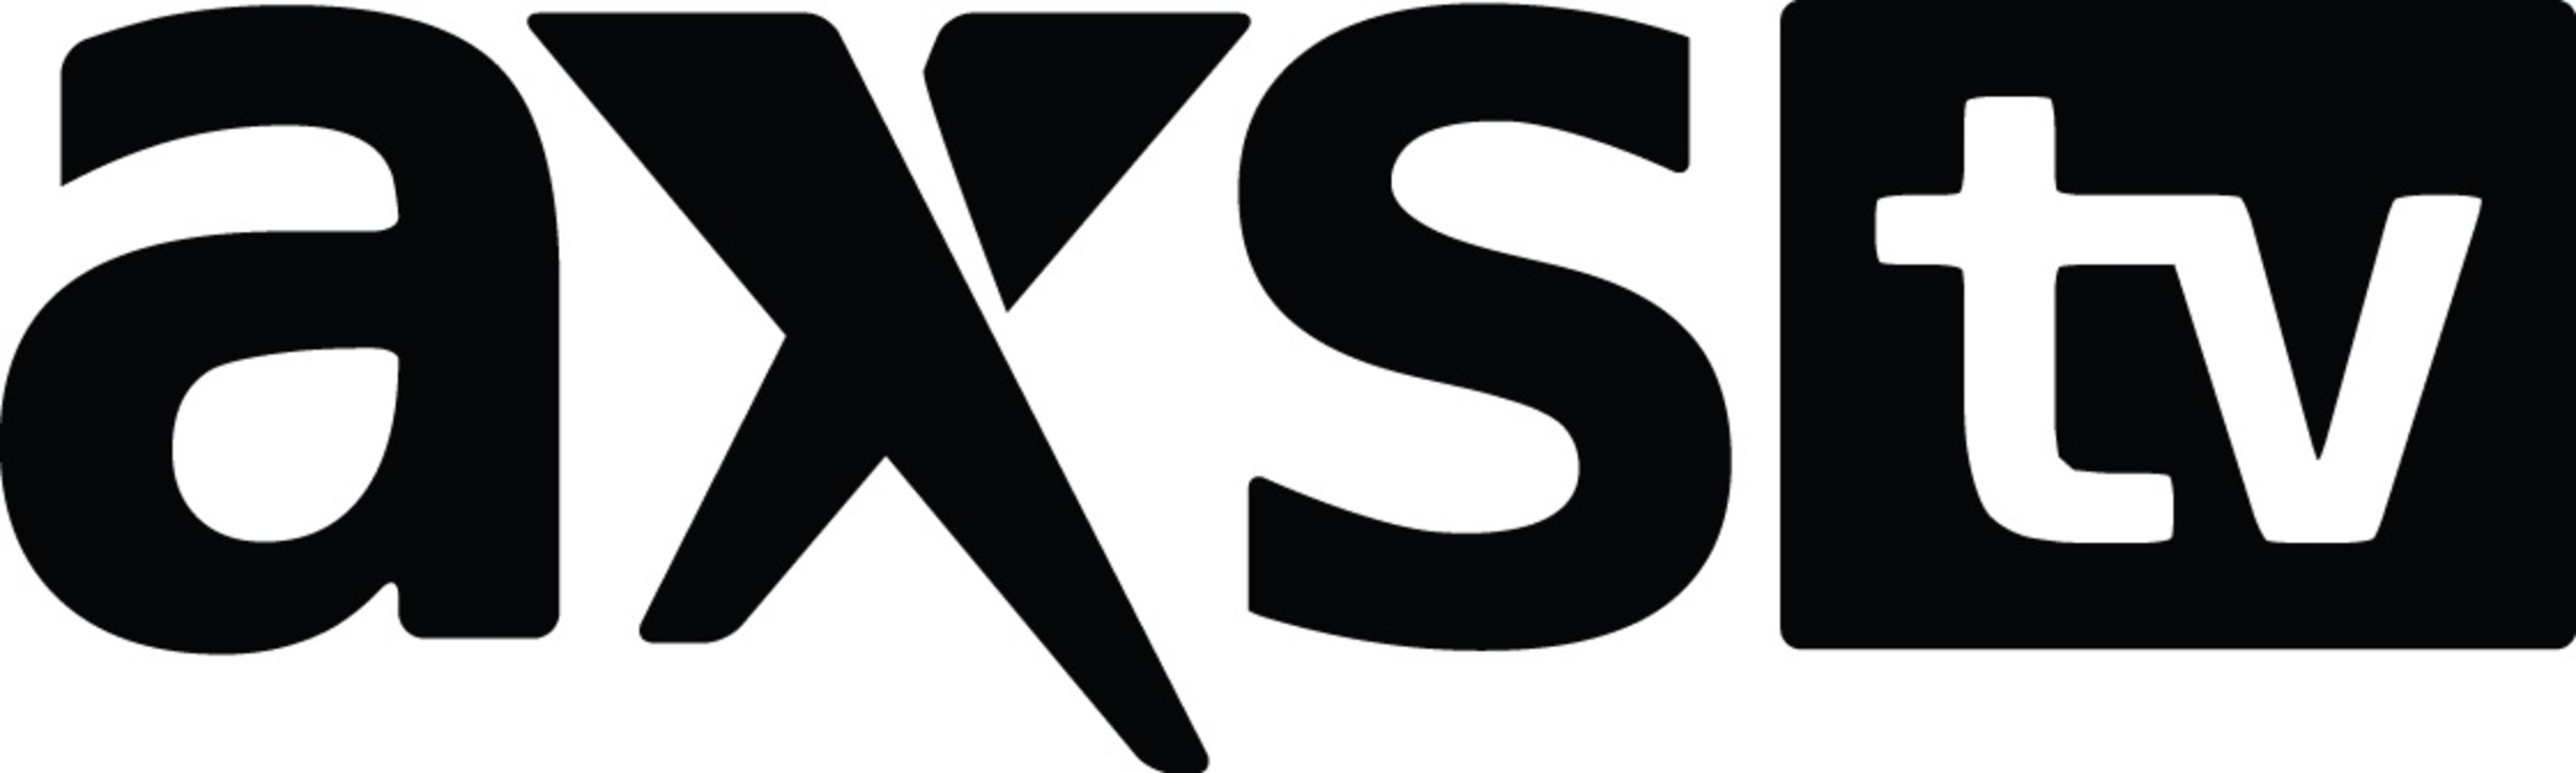 AXS TV Logo.